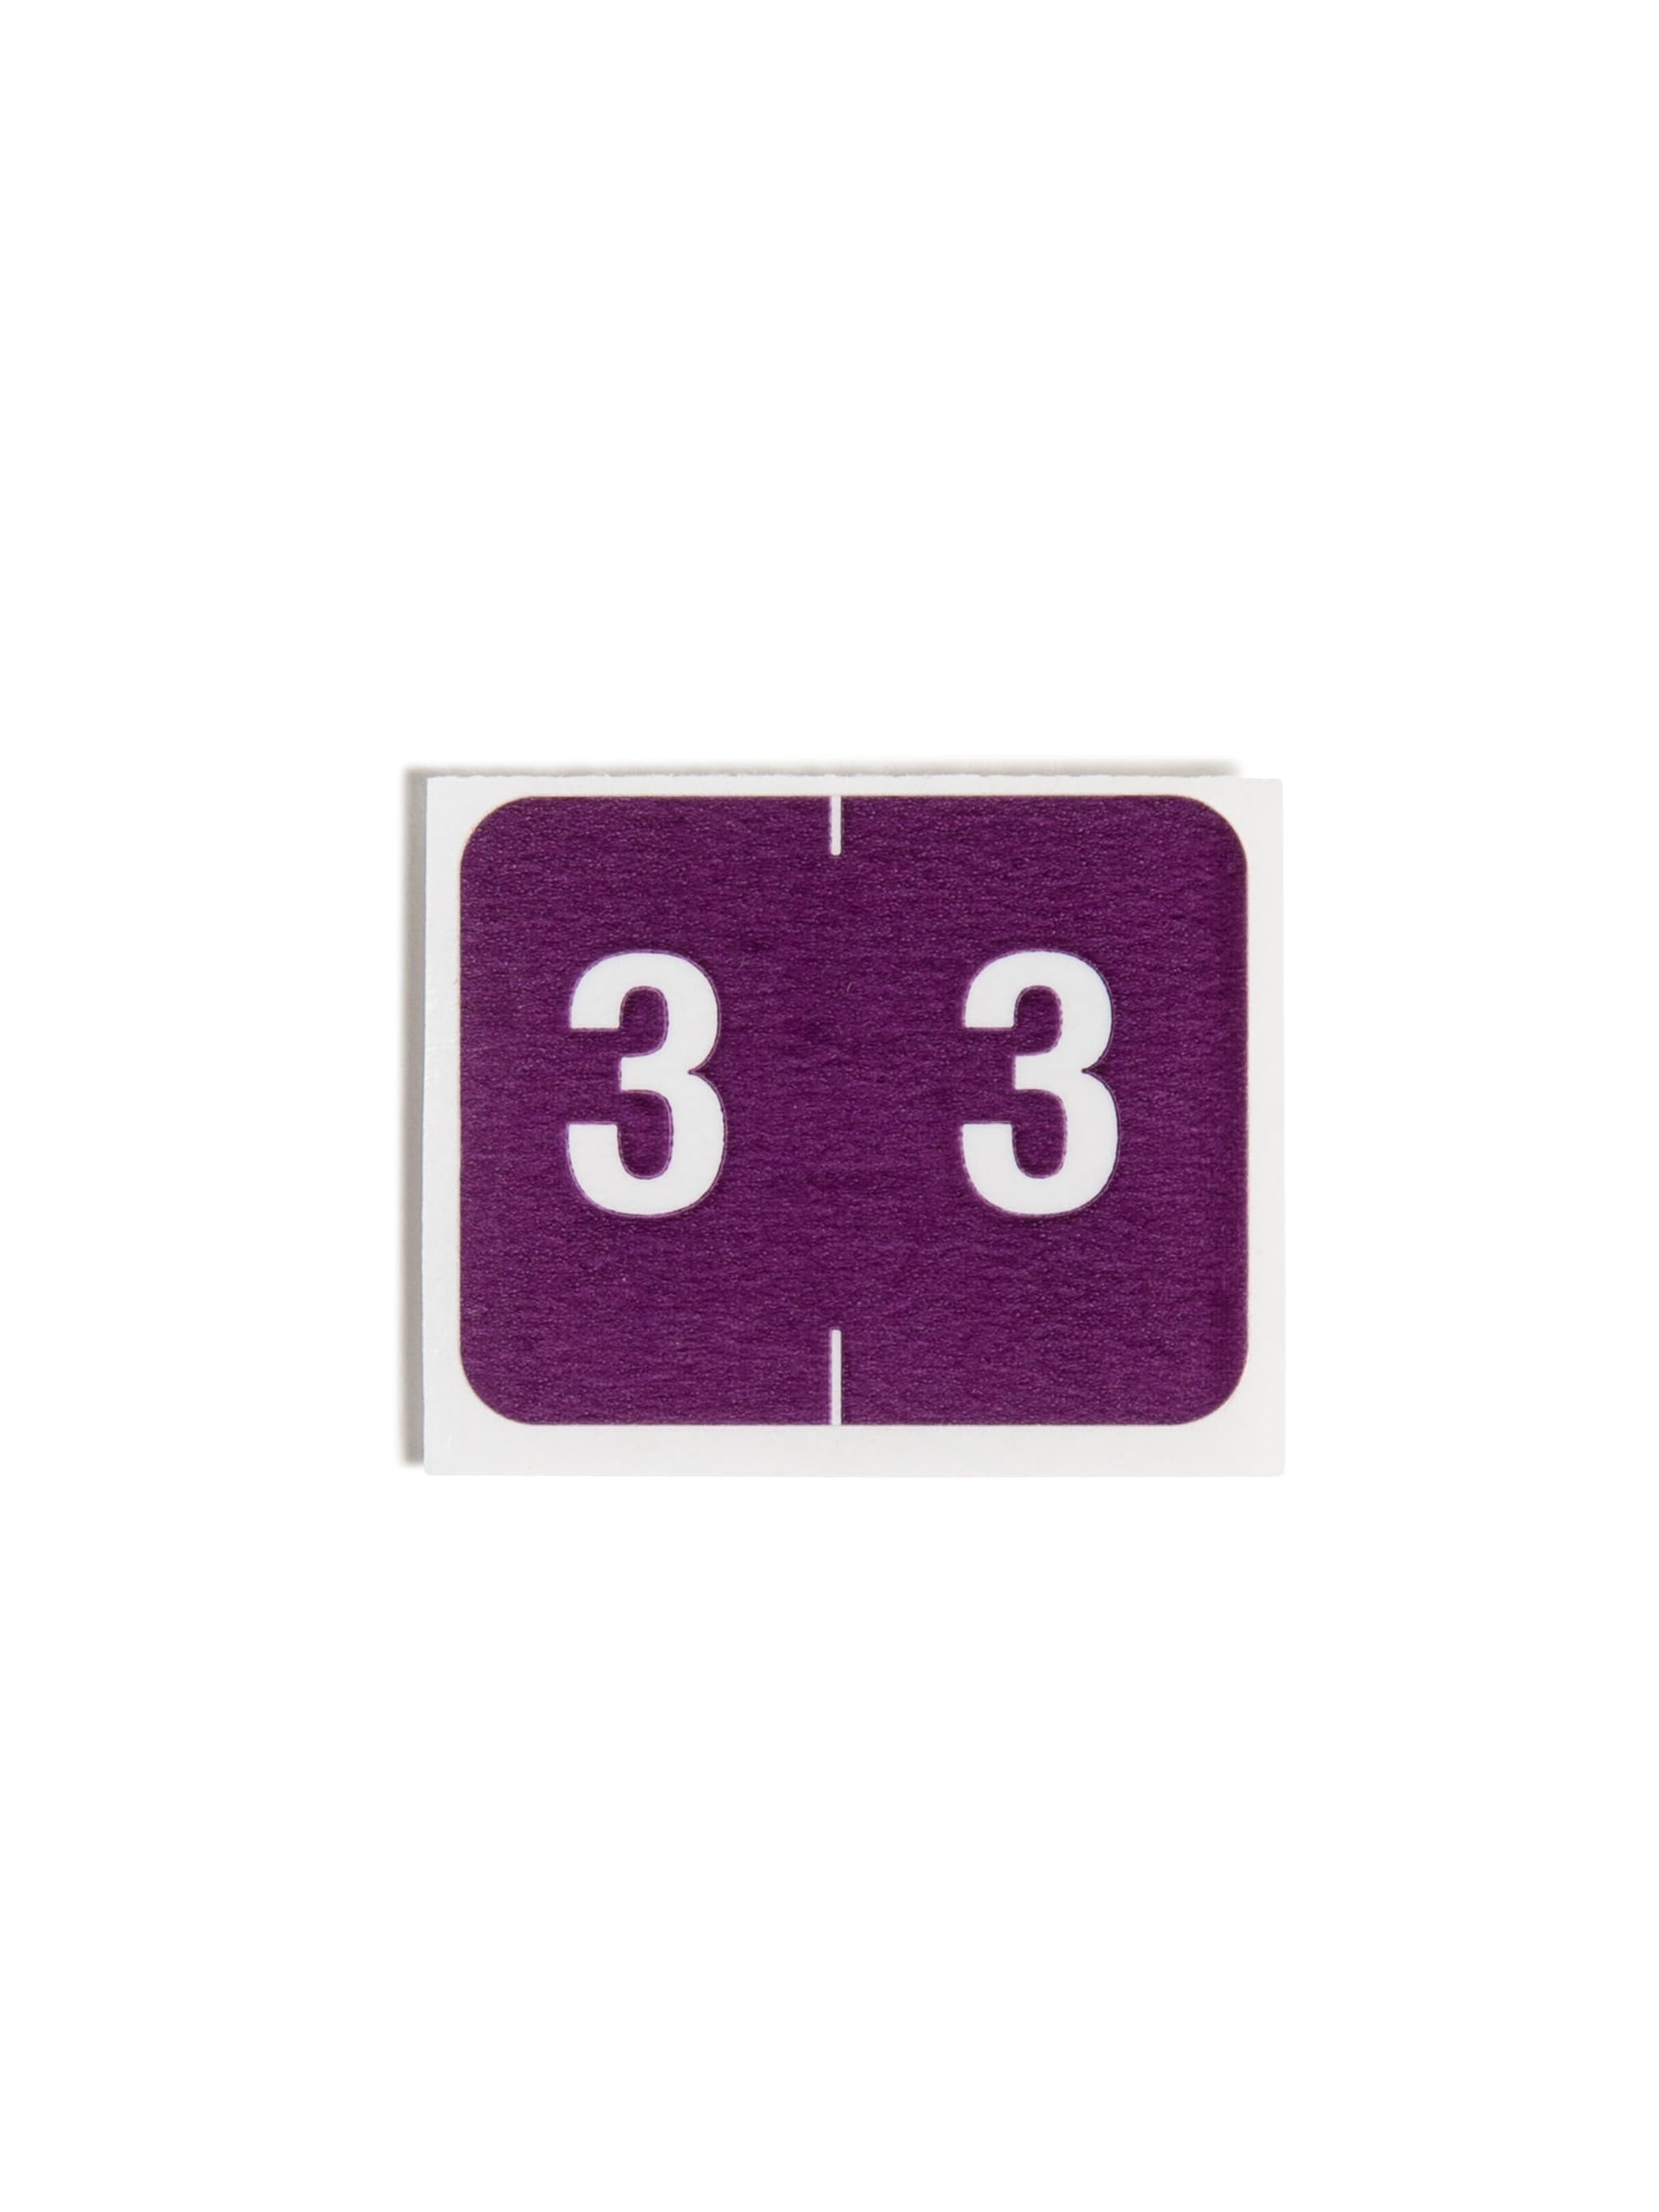 DCCRN Color-Coded Numeric Labels - Rolls, Purple Color, 1-1/4" X 1" Size, Set of 1, 086486673433